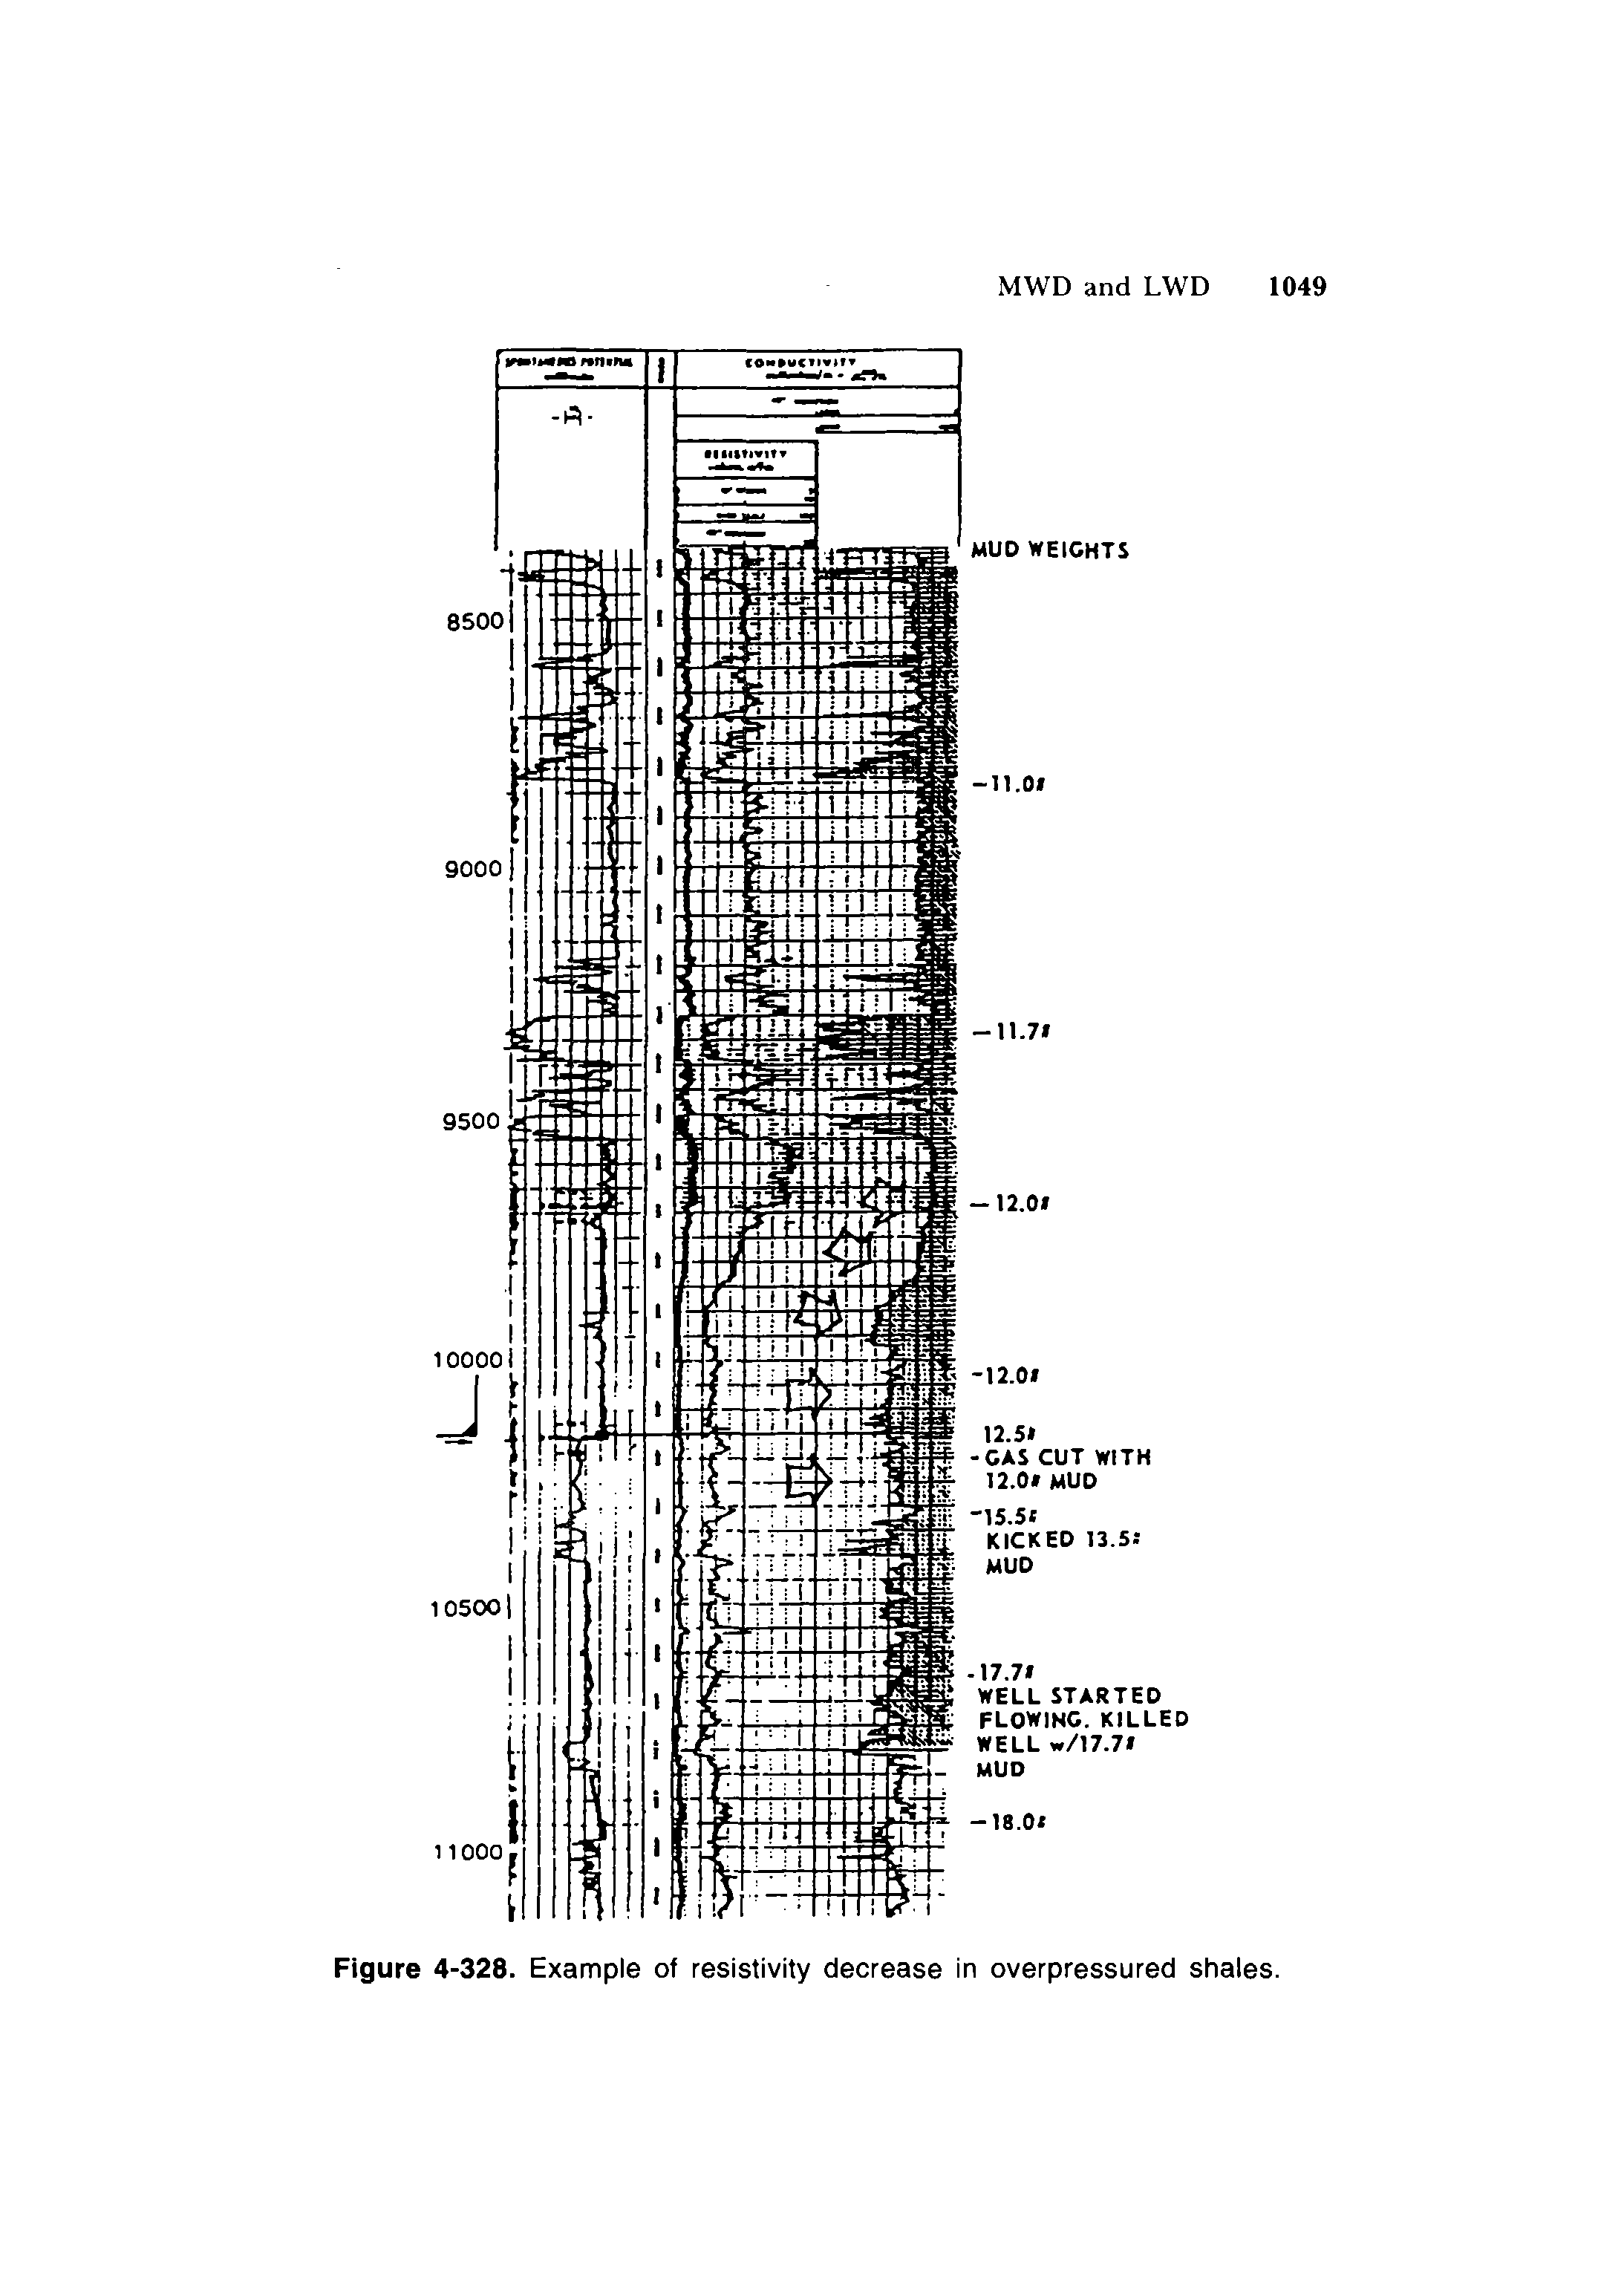 Figure 4-328. Example of resistivity decrease in overpressured shales.